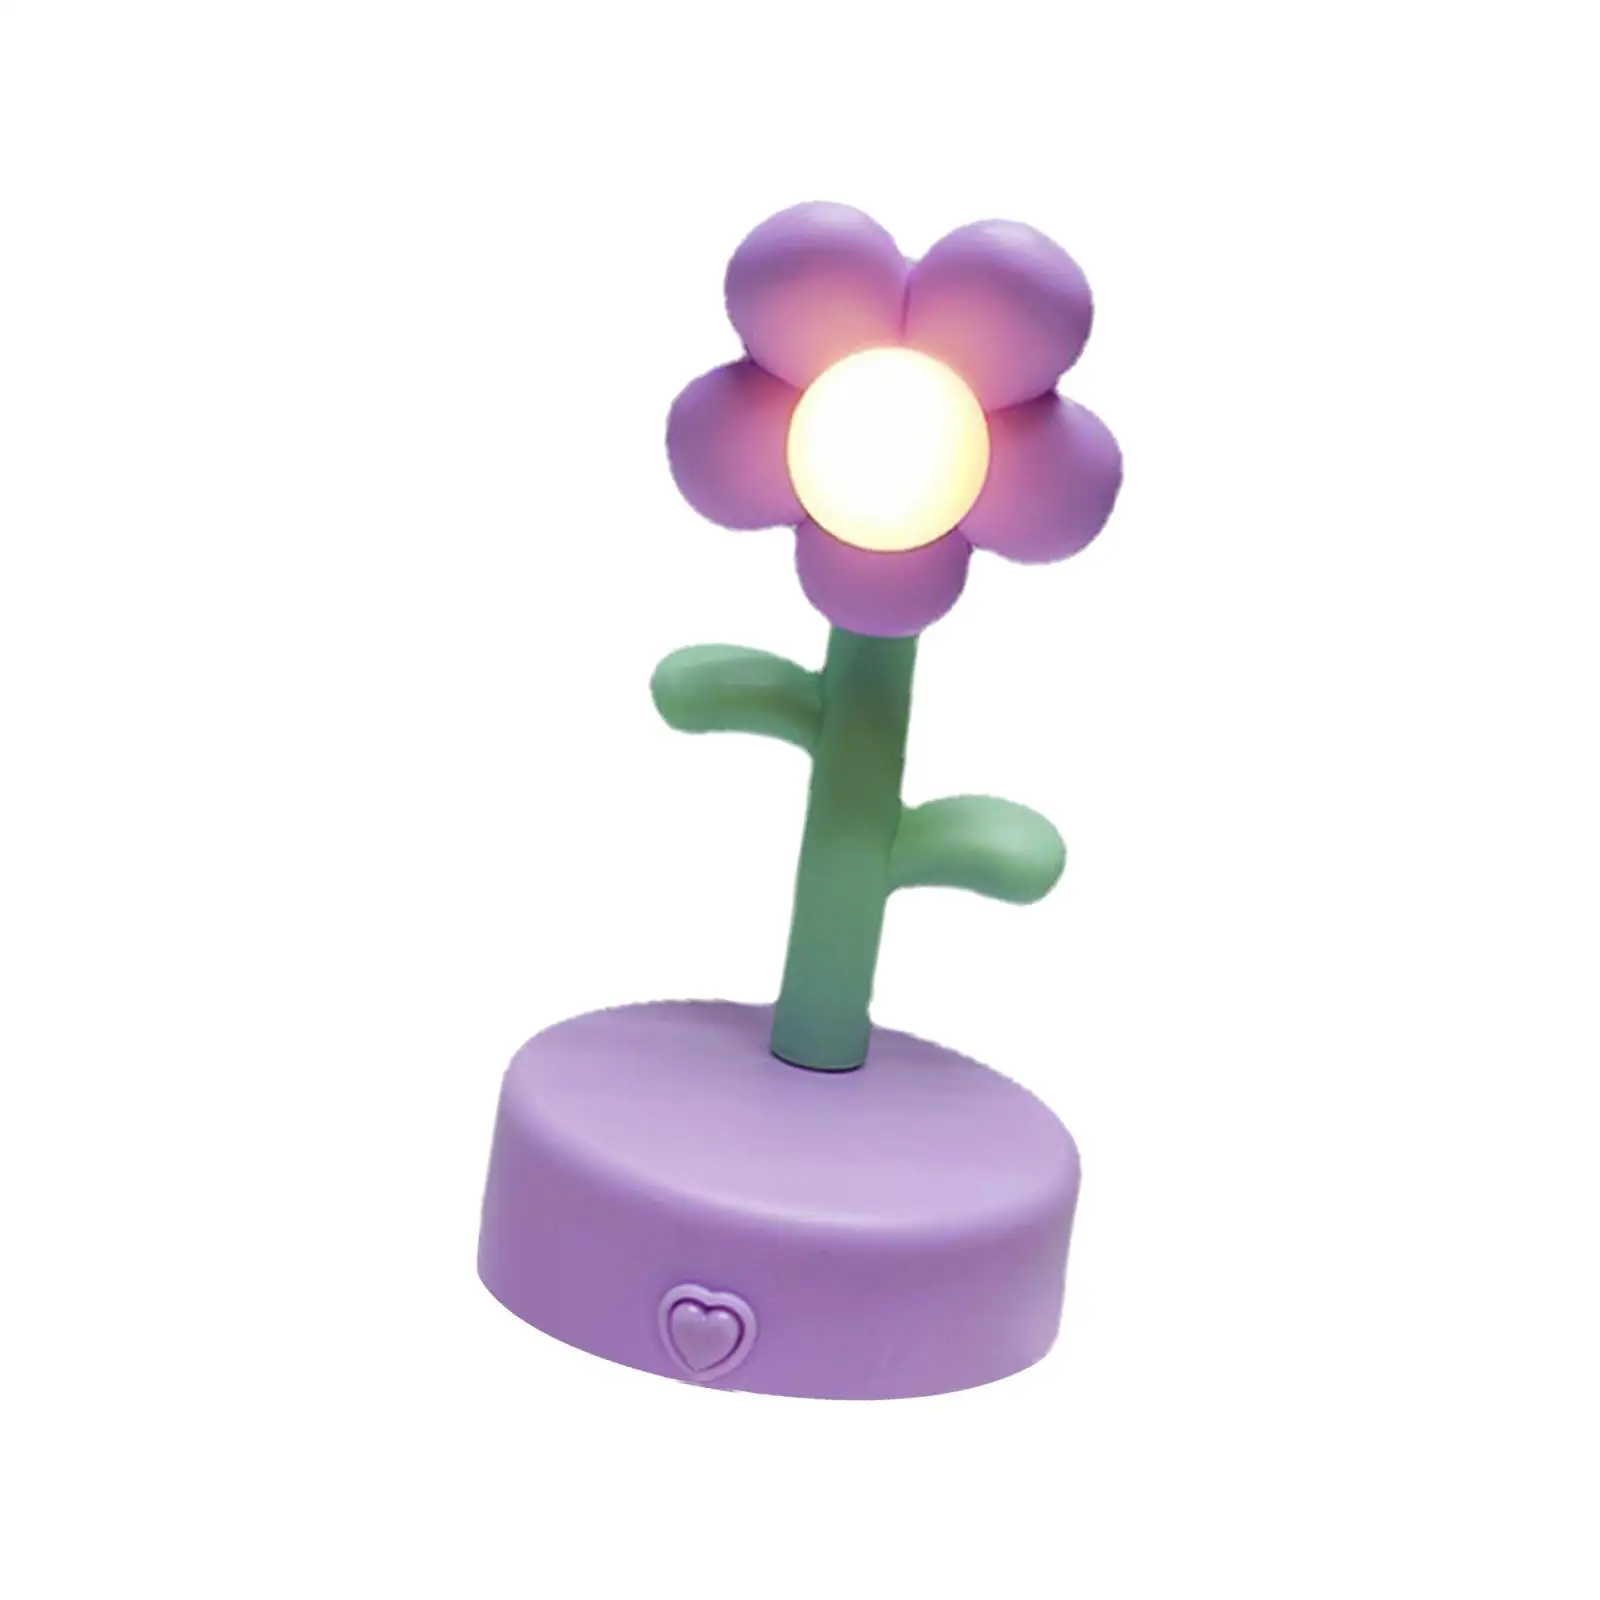 Creative Flower Table Lamp Night Light Portable NightStand Lamp Desk Lamp for Living Room Bedroom Dorm Decoration Kids Gift